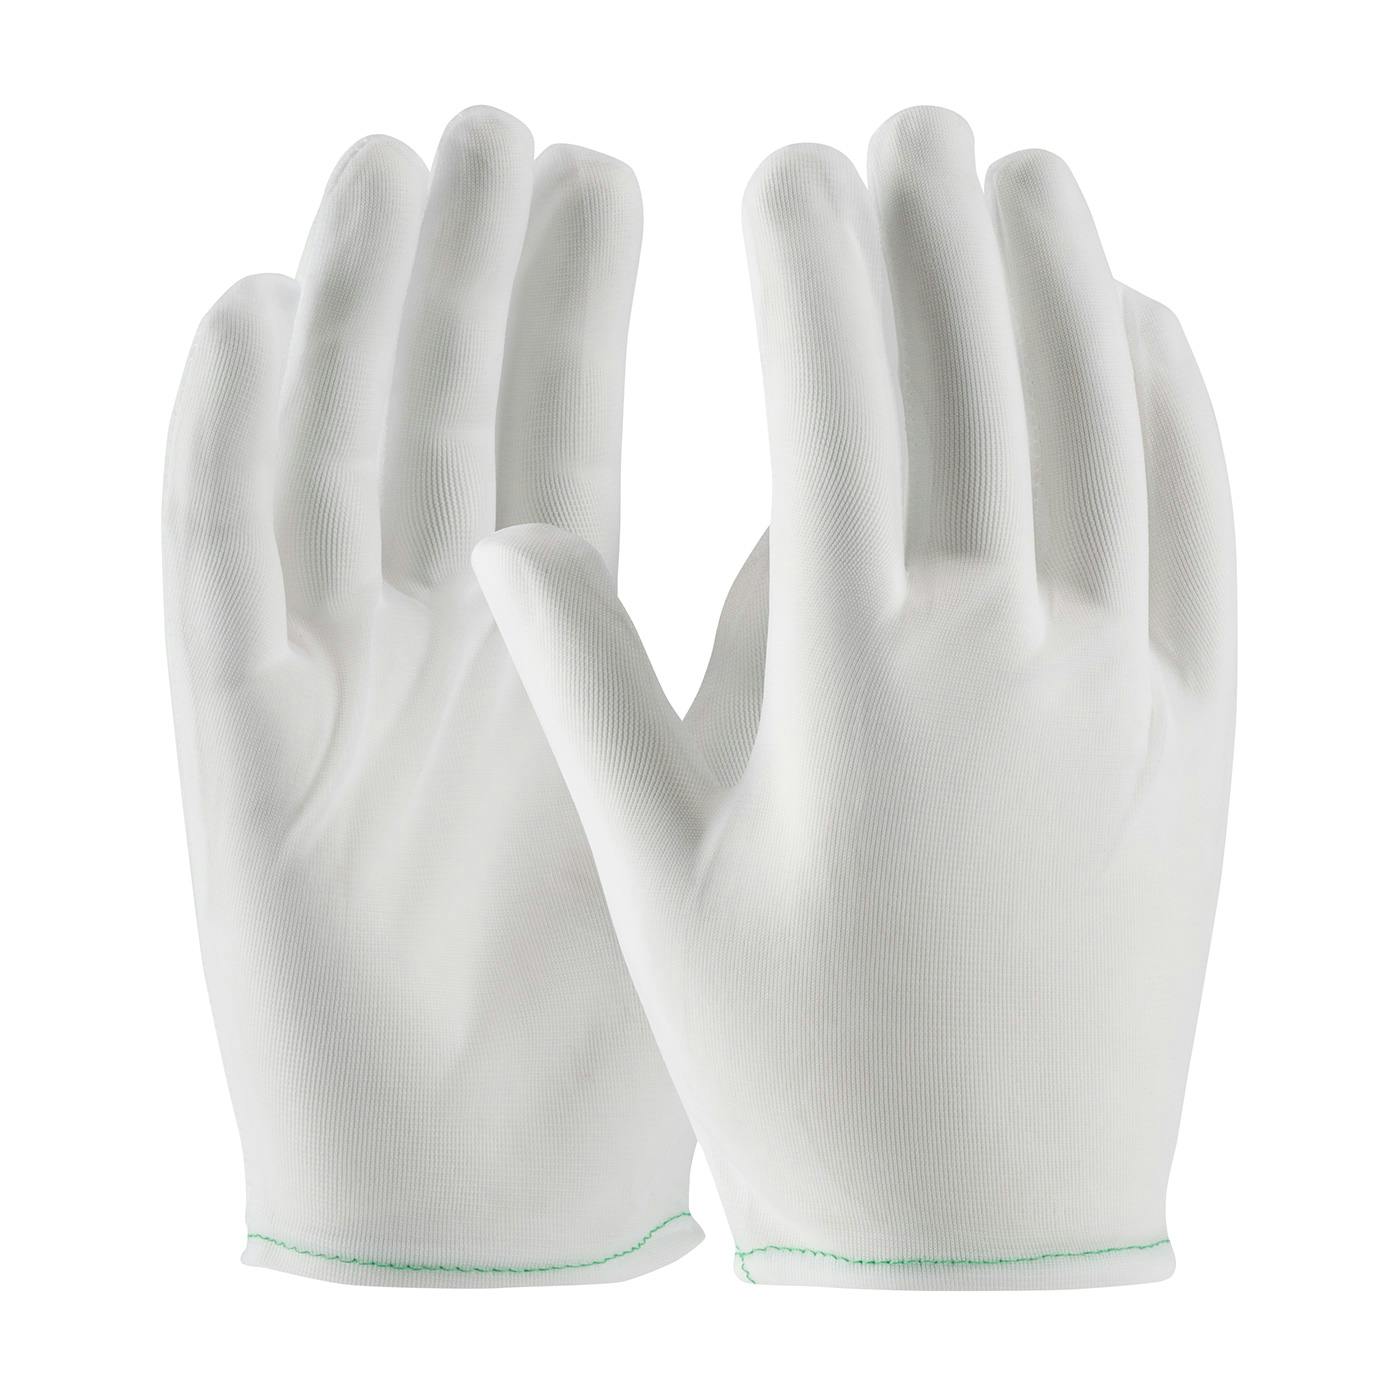 CleanTeam® 40 Denier Tricot Inspection Glove with Rolled Hem Cuff - Men's (98-740)